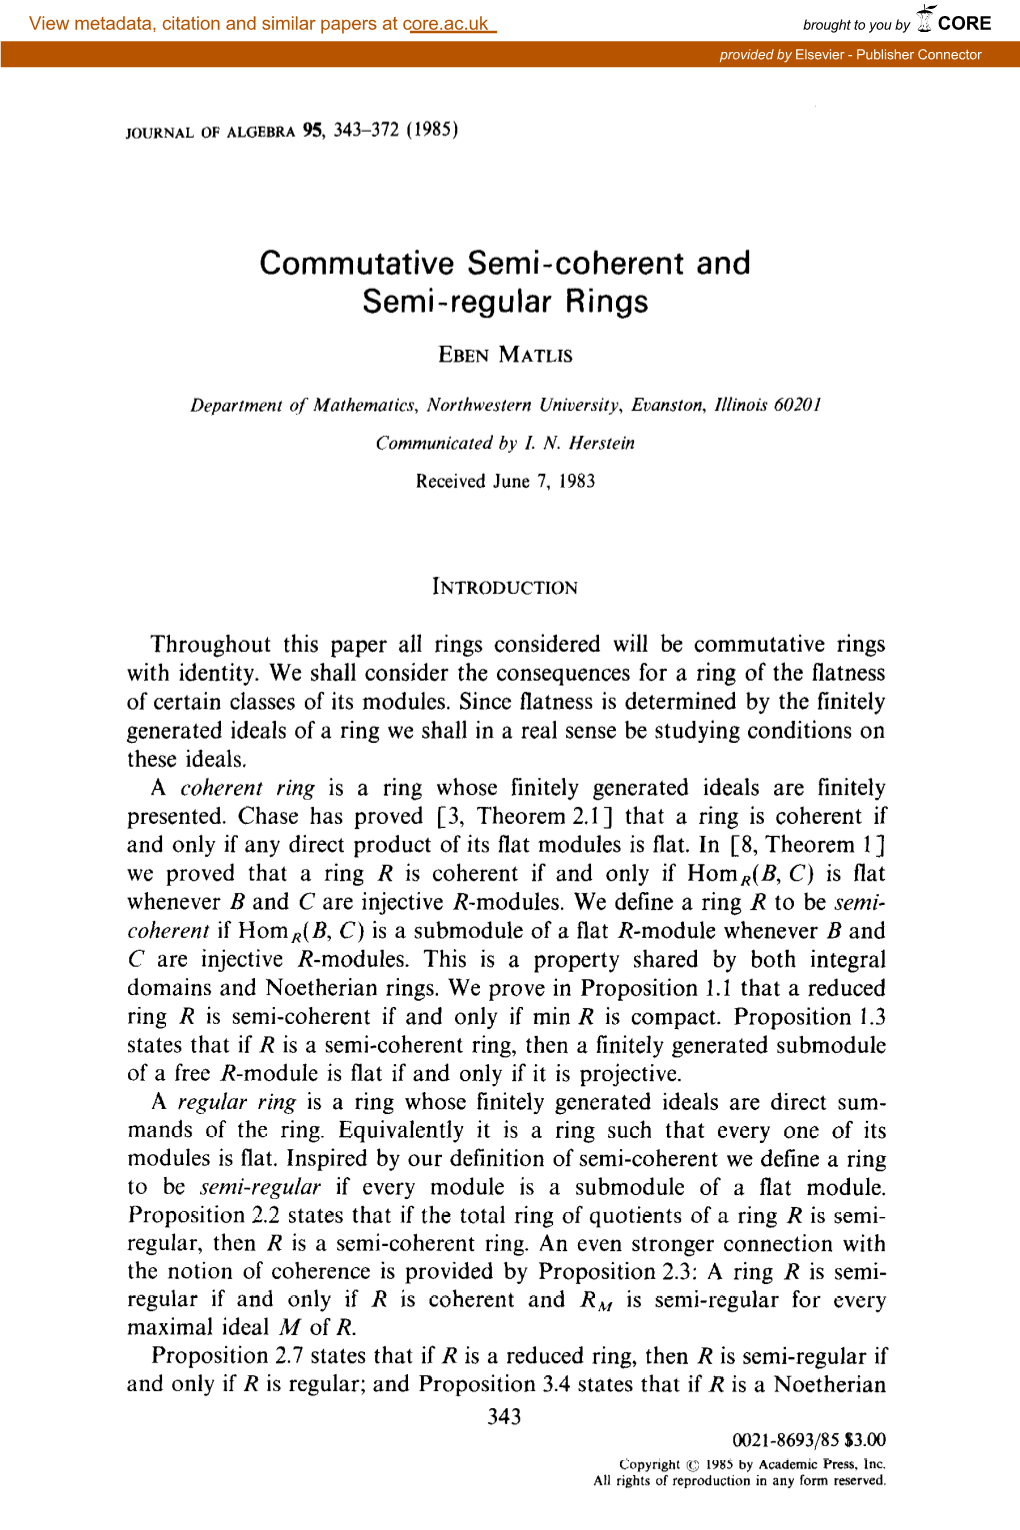 Commutative Semi-Coherent and Semi-Regular Rings